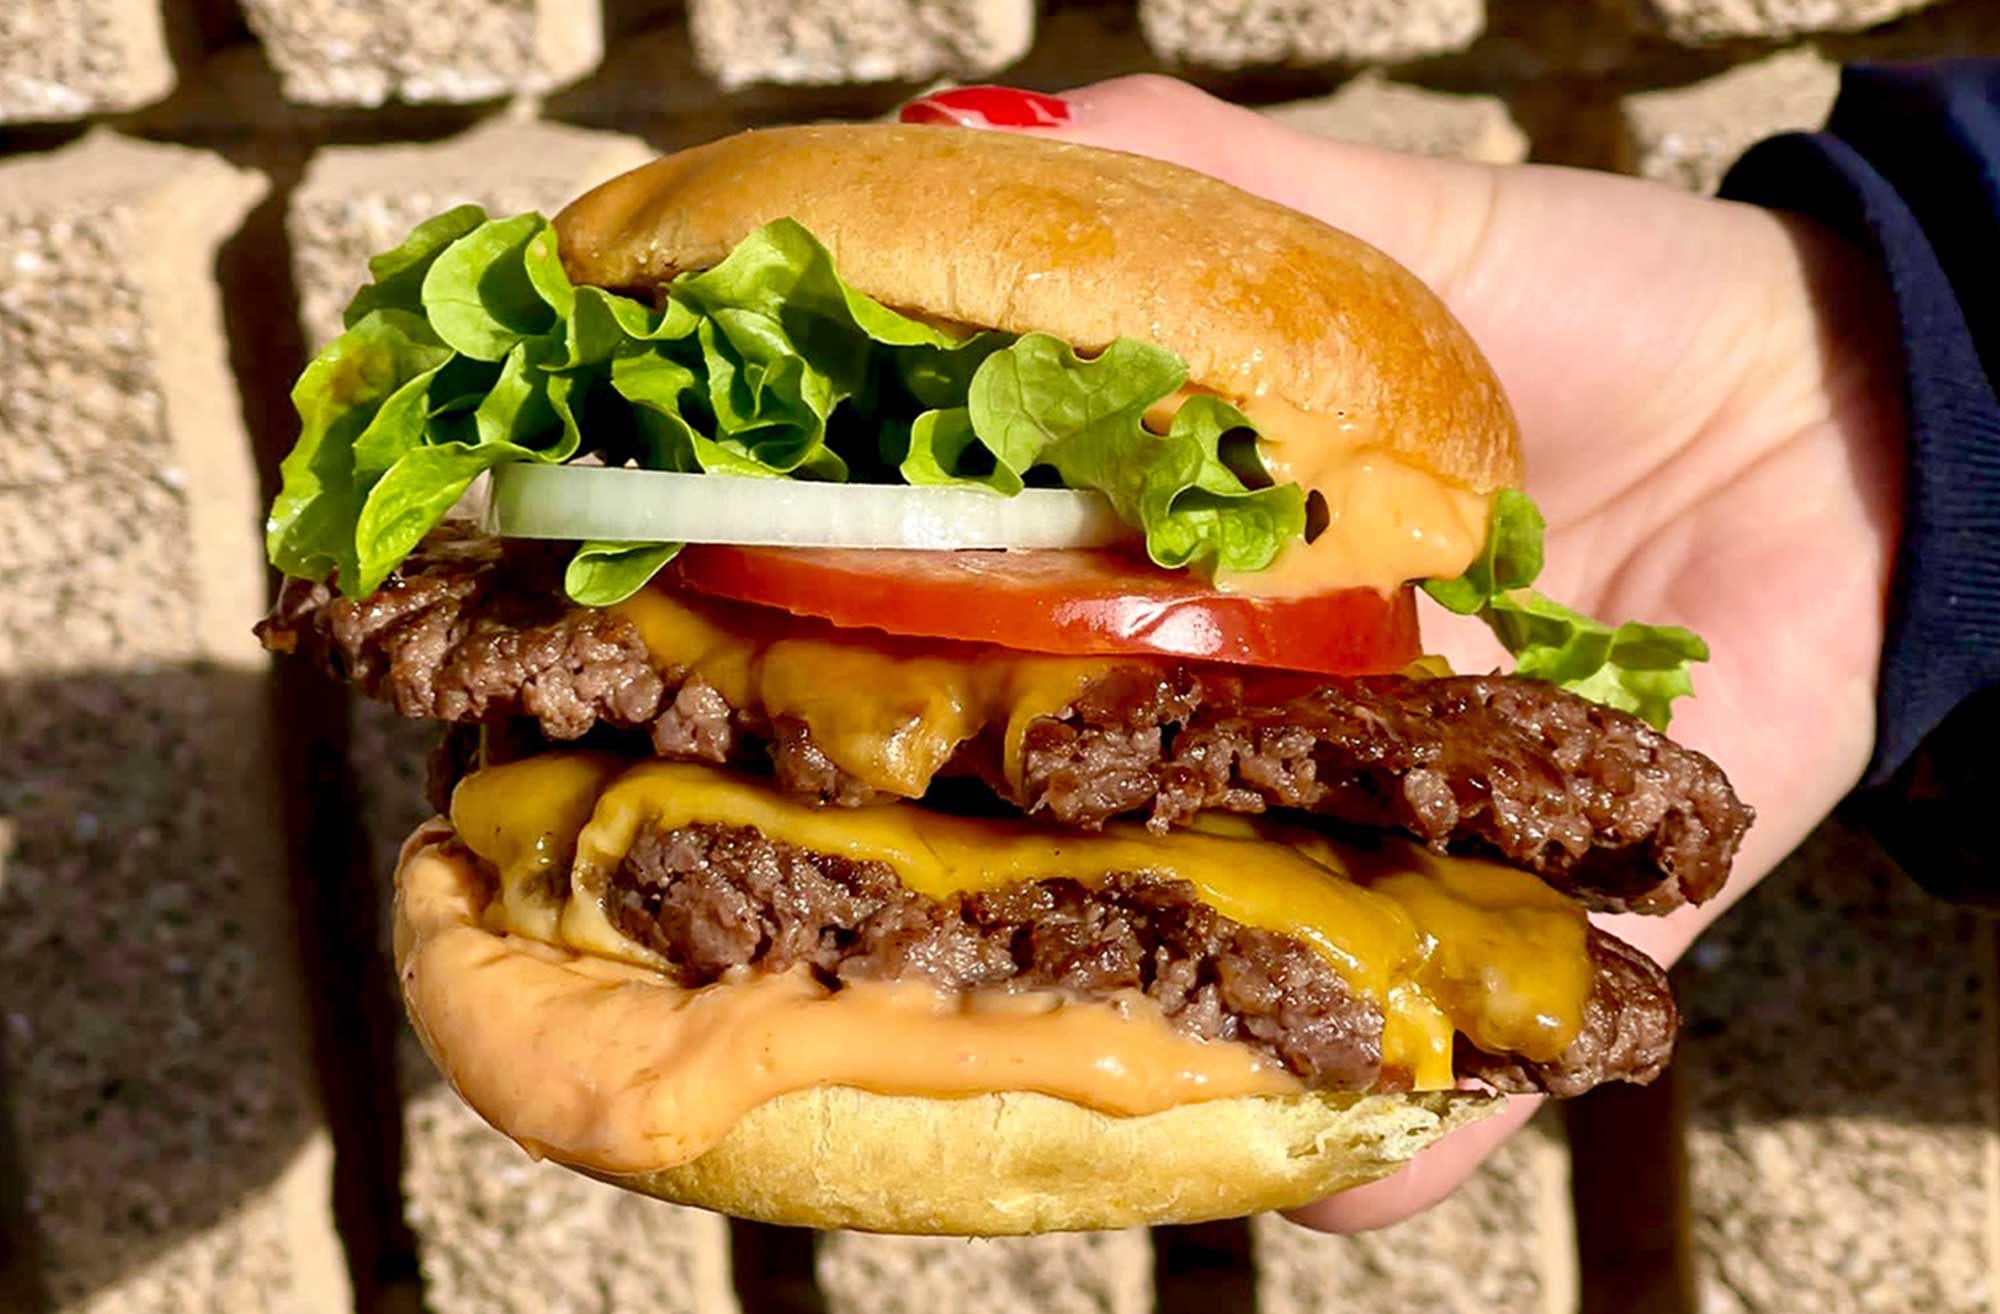 Giornata mondiale dell'hamburger — Burger by Pep's